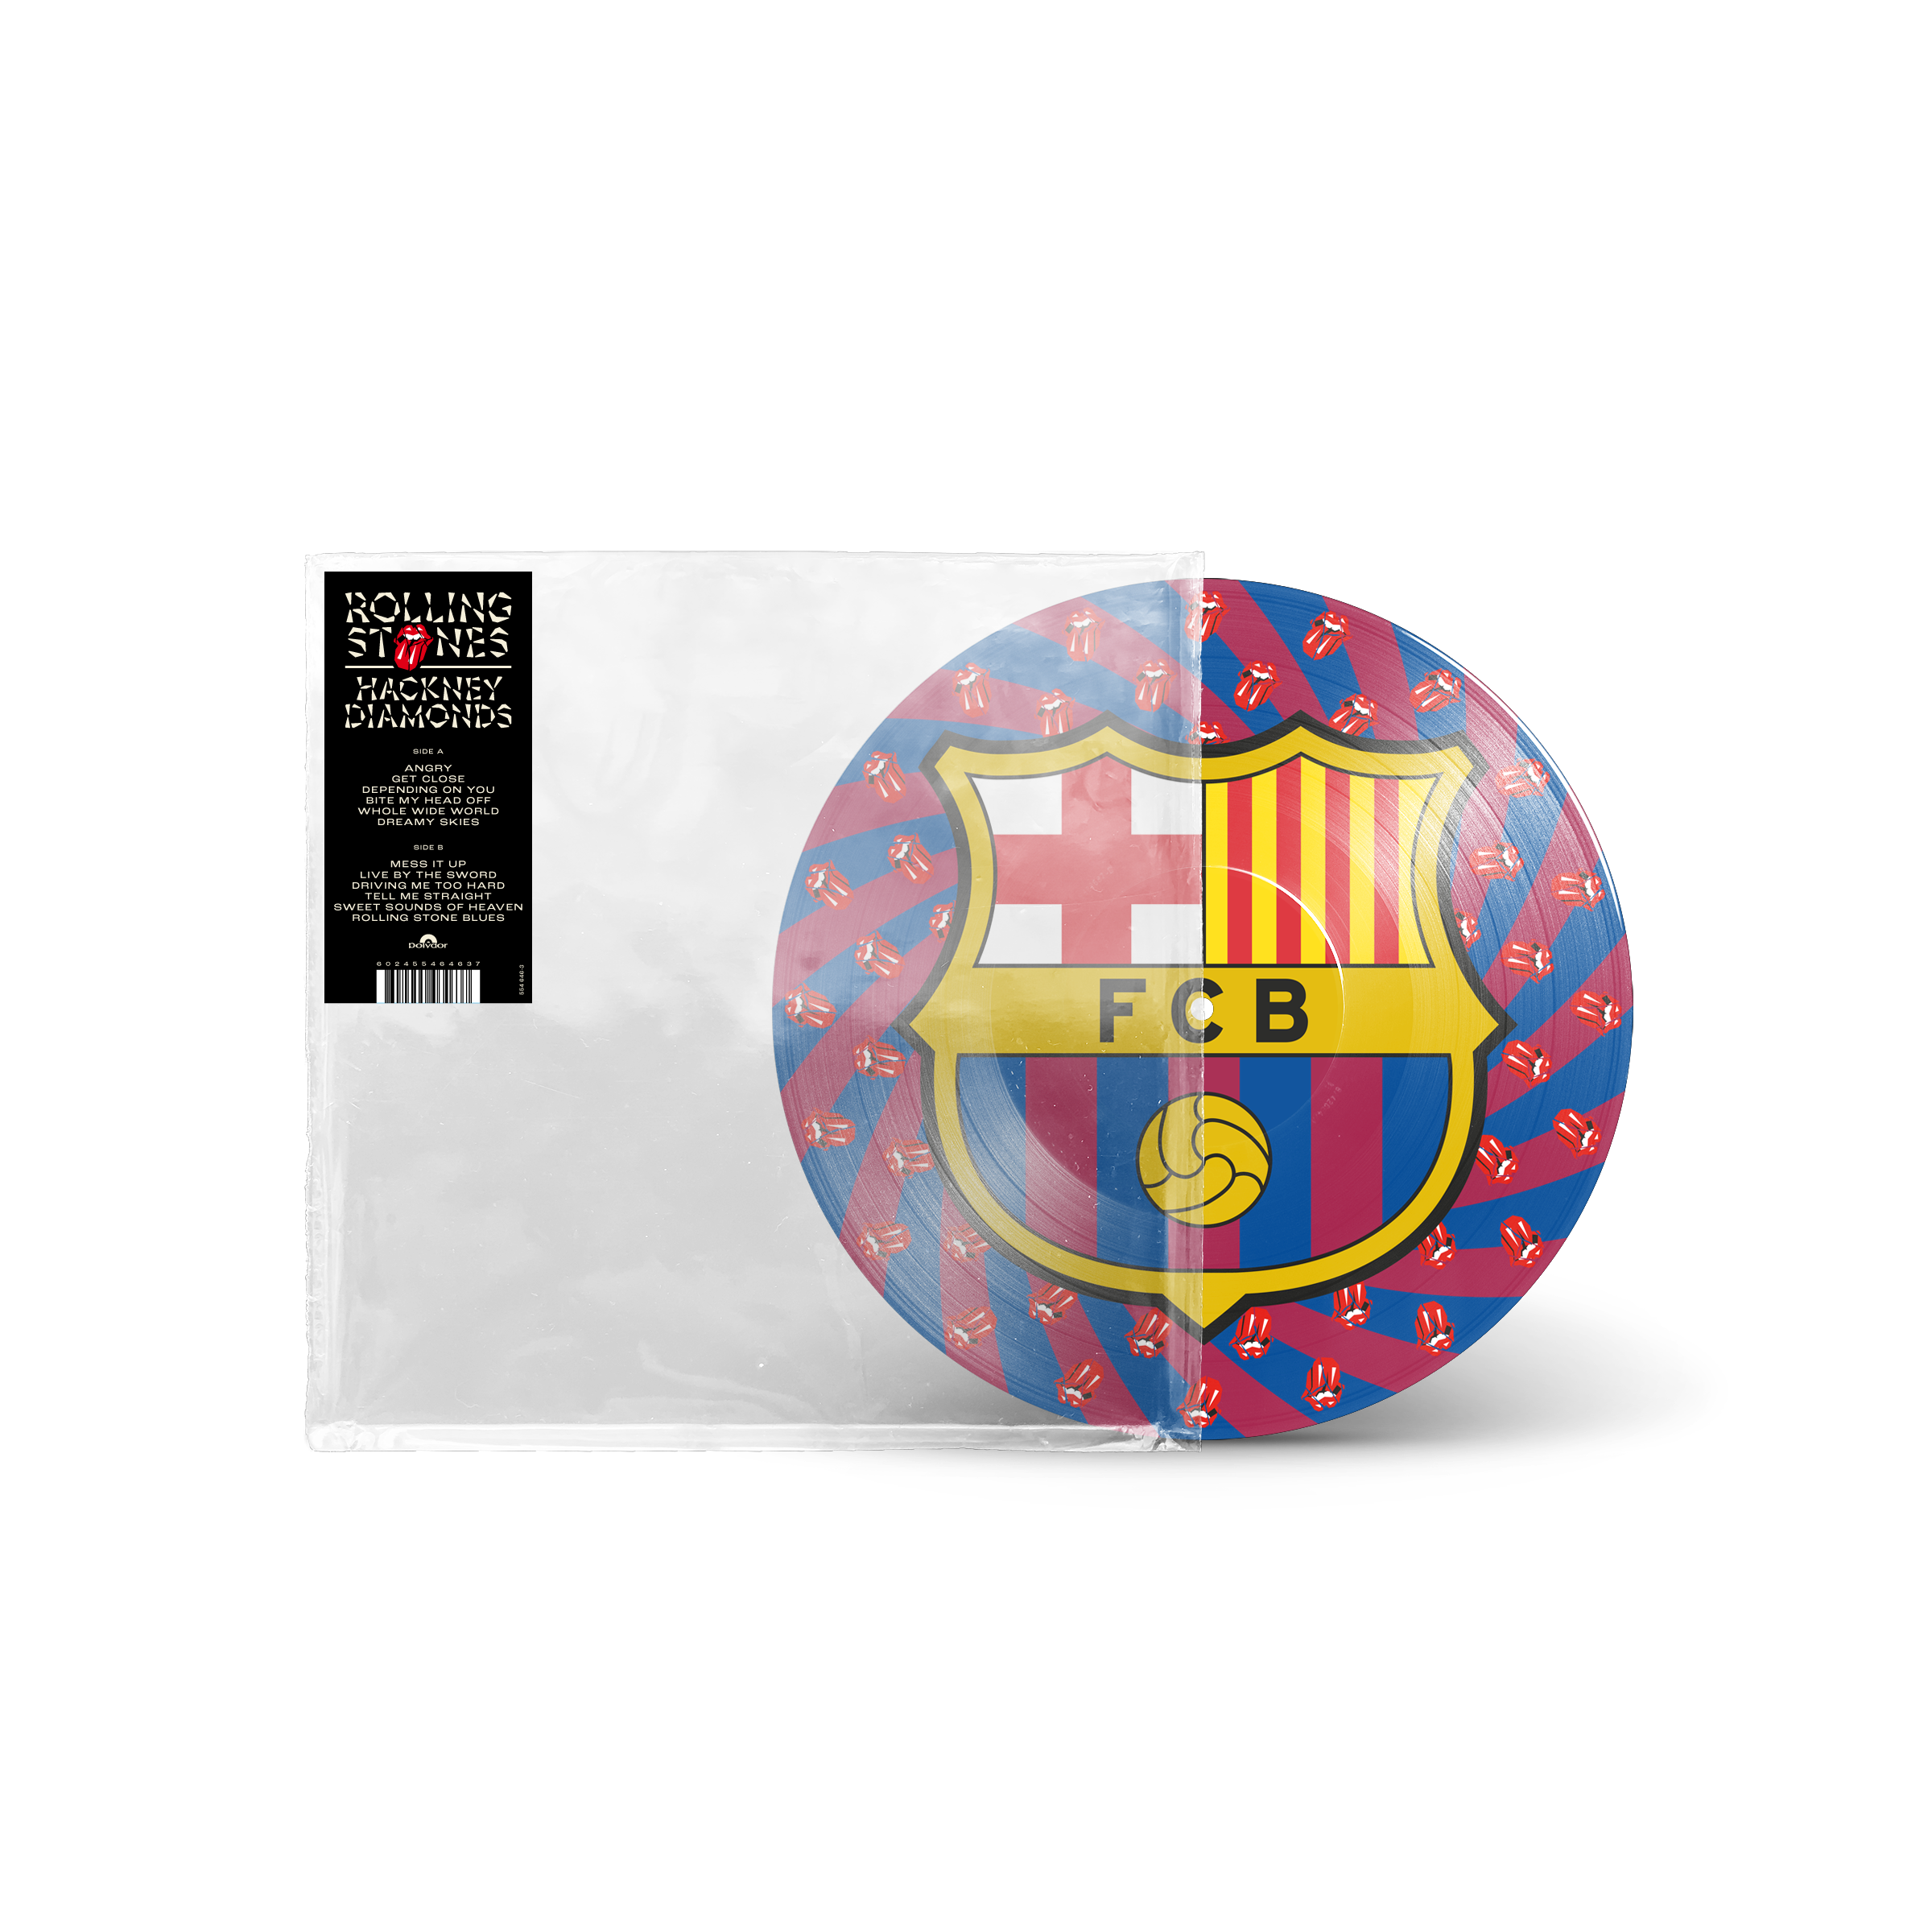 The Rolling Stones - Hackney Diamonds Barcelona FC Picture Disc